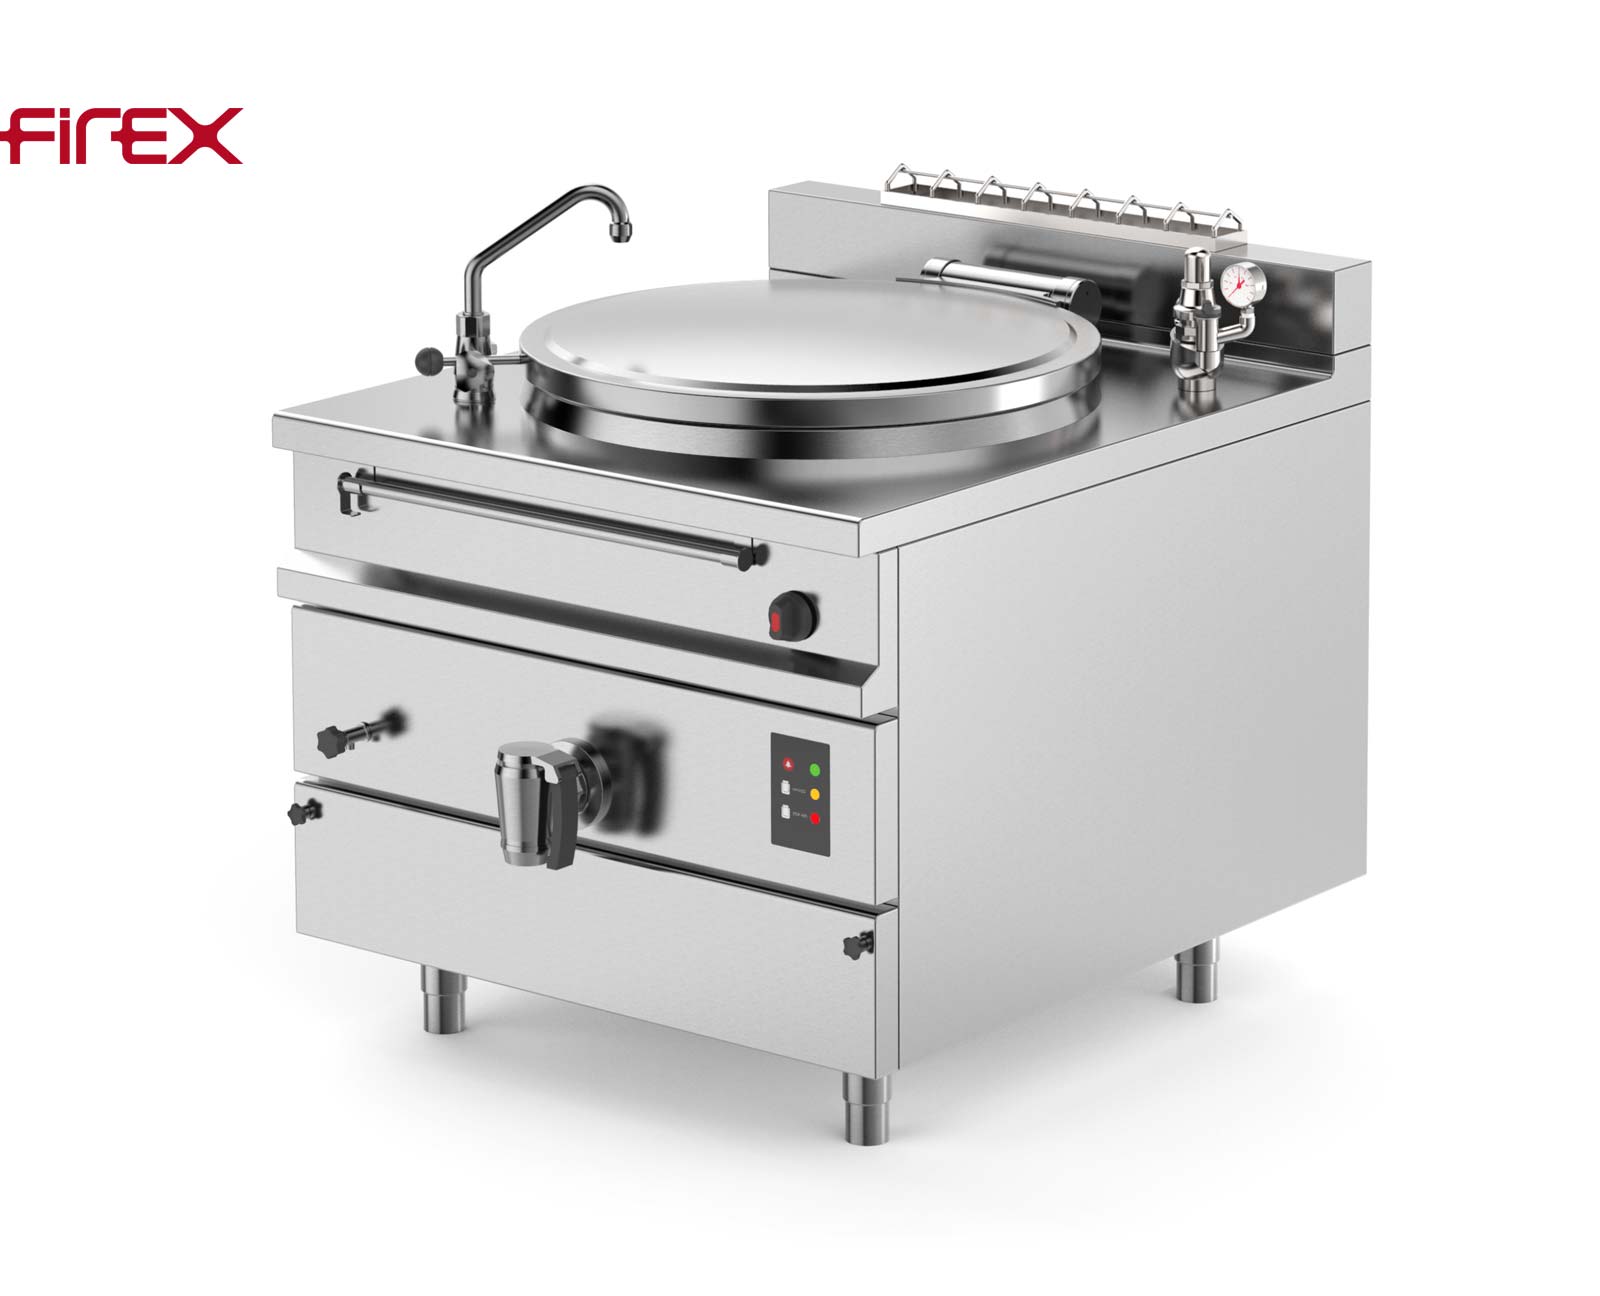 Firex Easypan Extragrosse Kochkessel mit 100, 200, 300, 400, 500 Liter